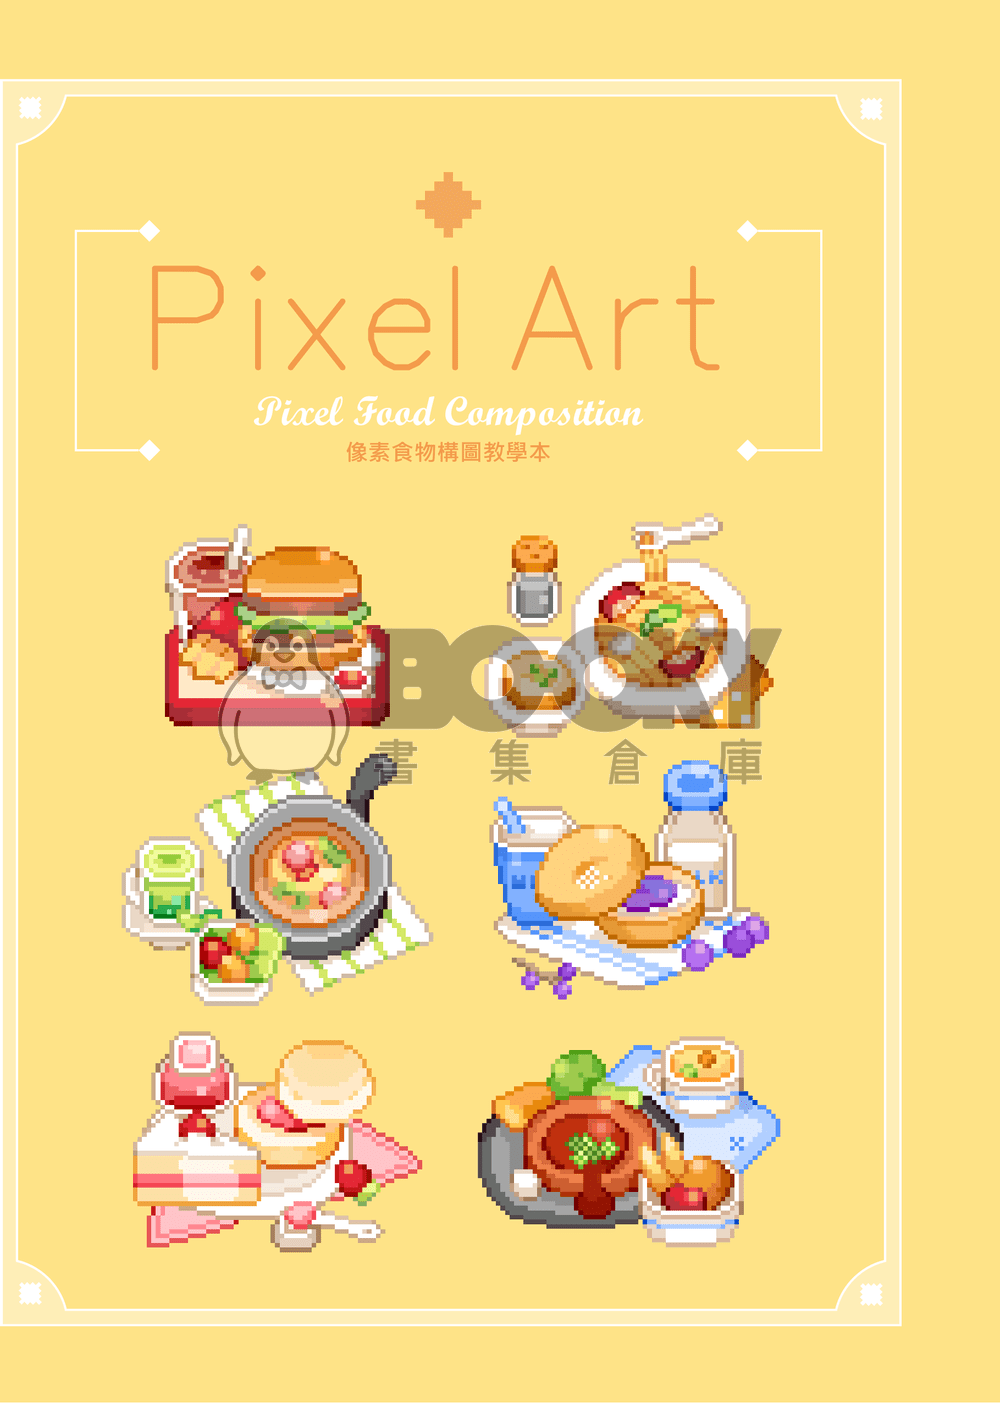 「Pixel Art2」像素食物構圖教學本 試閱圖片